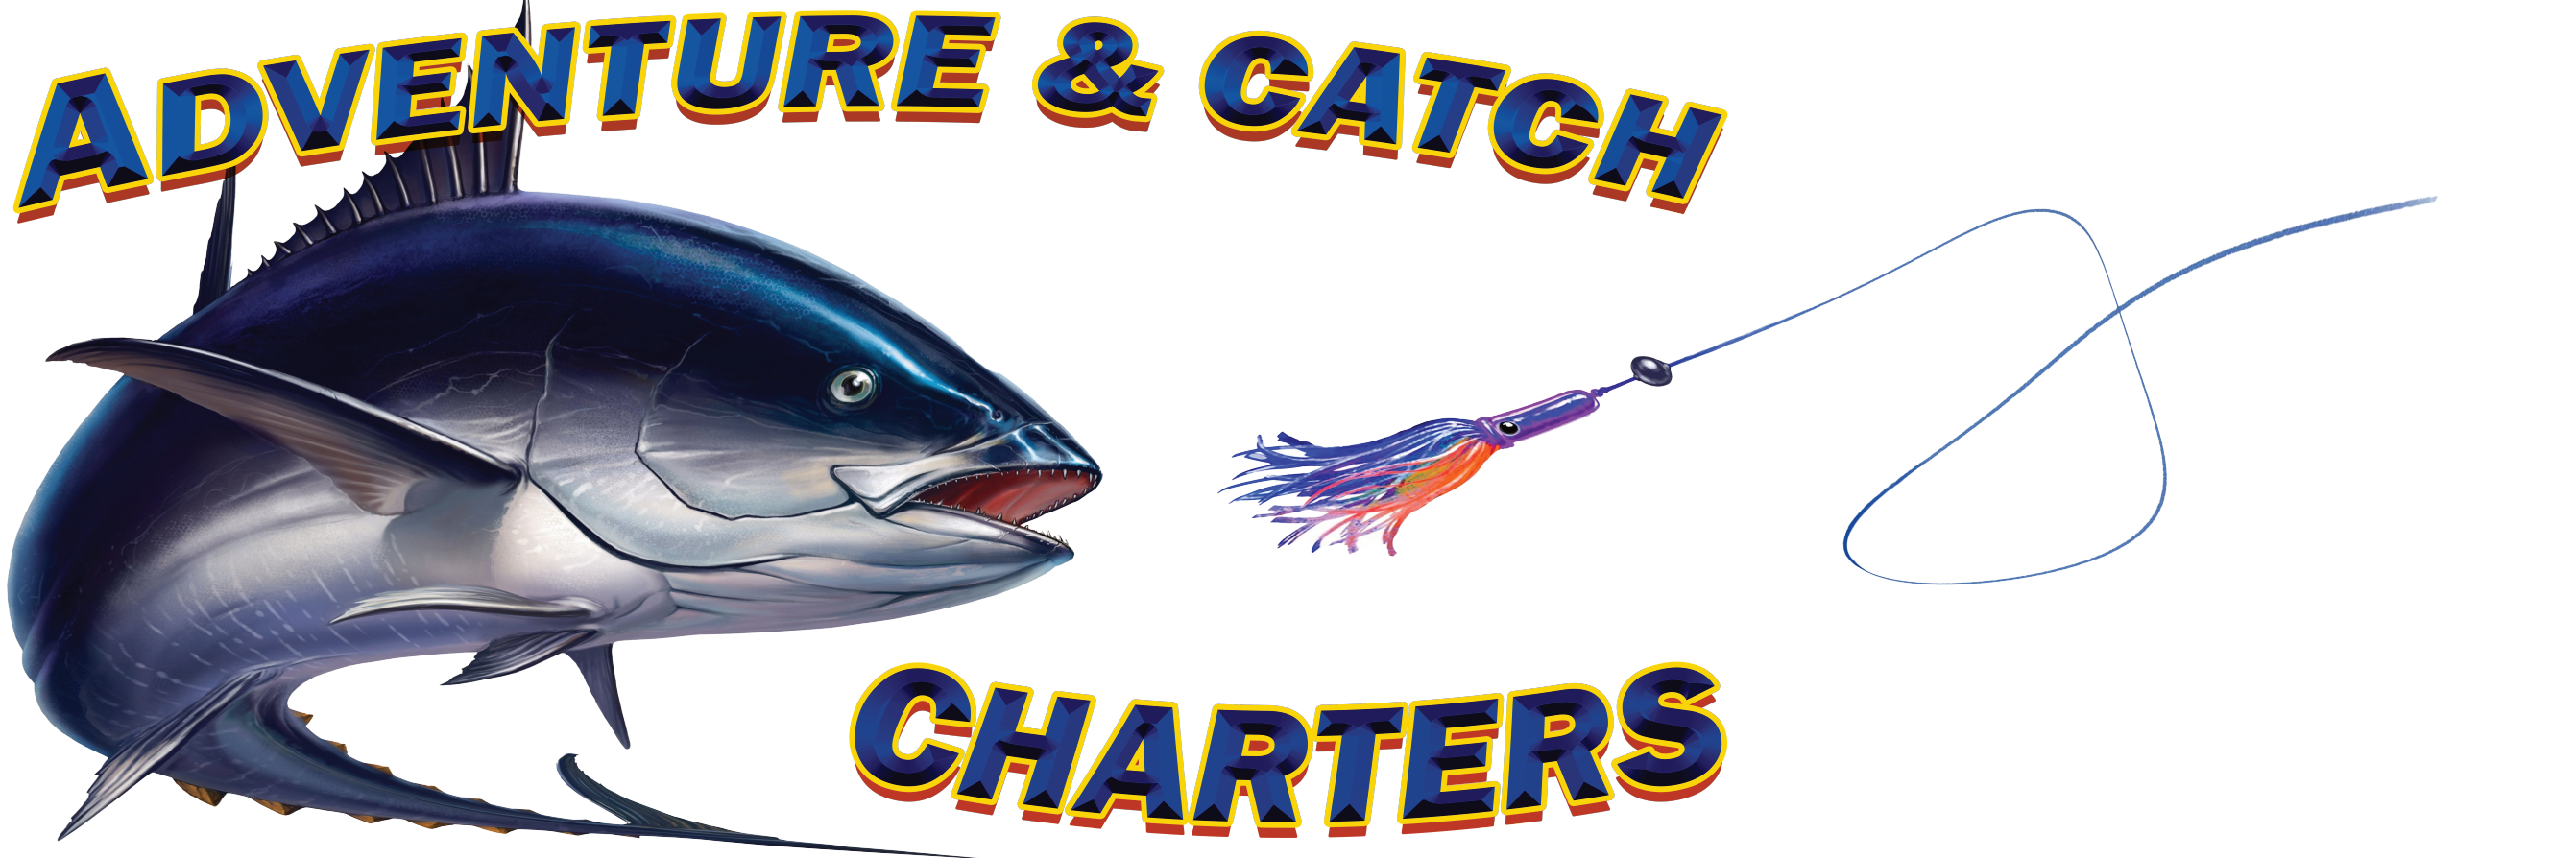 Adventure & Catch Charters, LLC